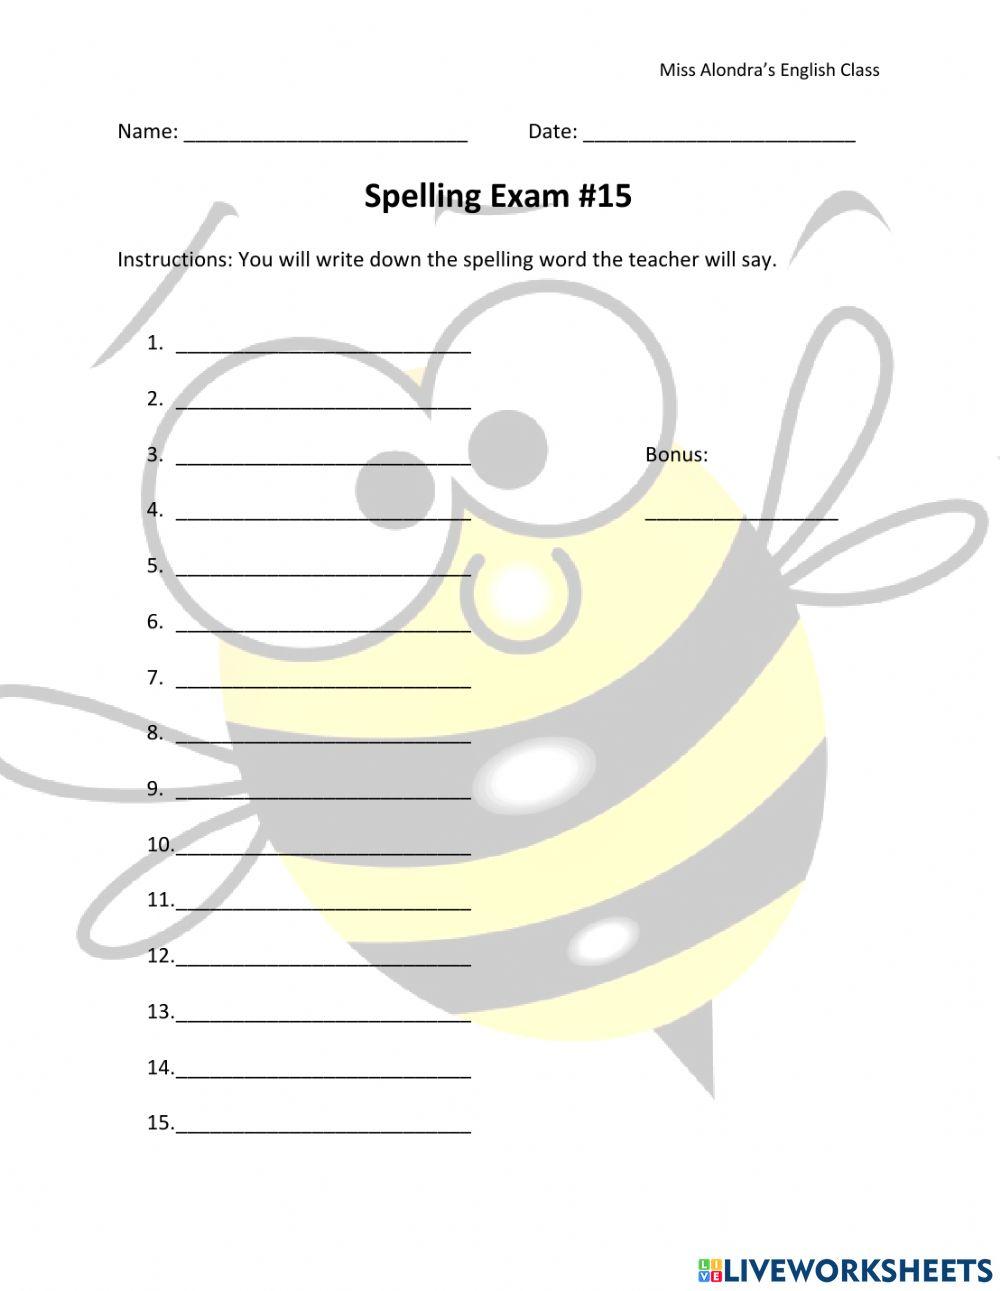 Spelling Exam -14